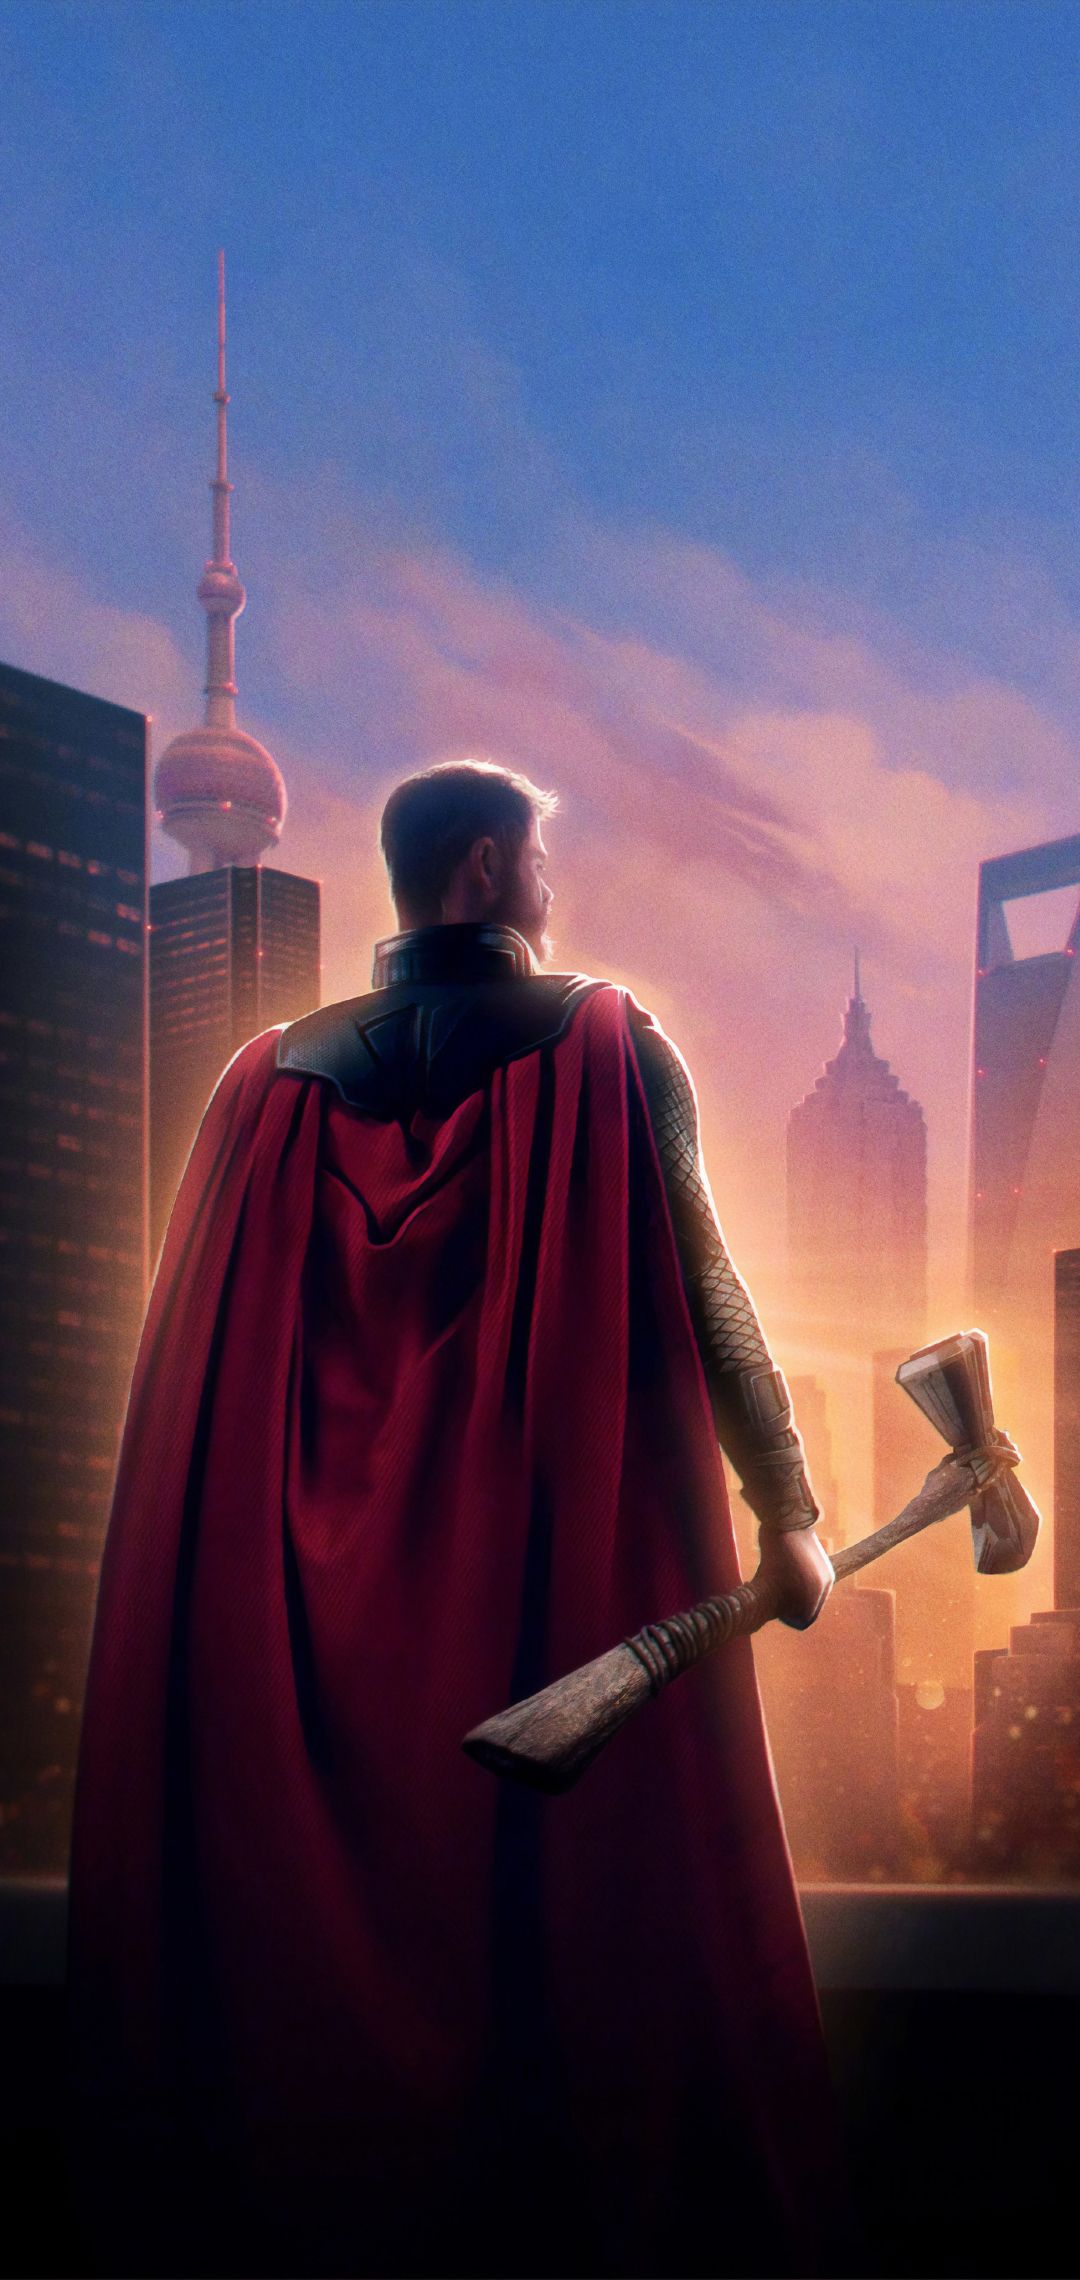 Thor Avengers Endgame One Plus Huawei p Honor view